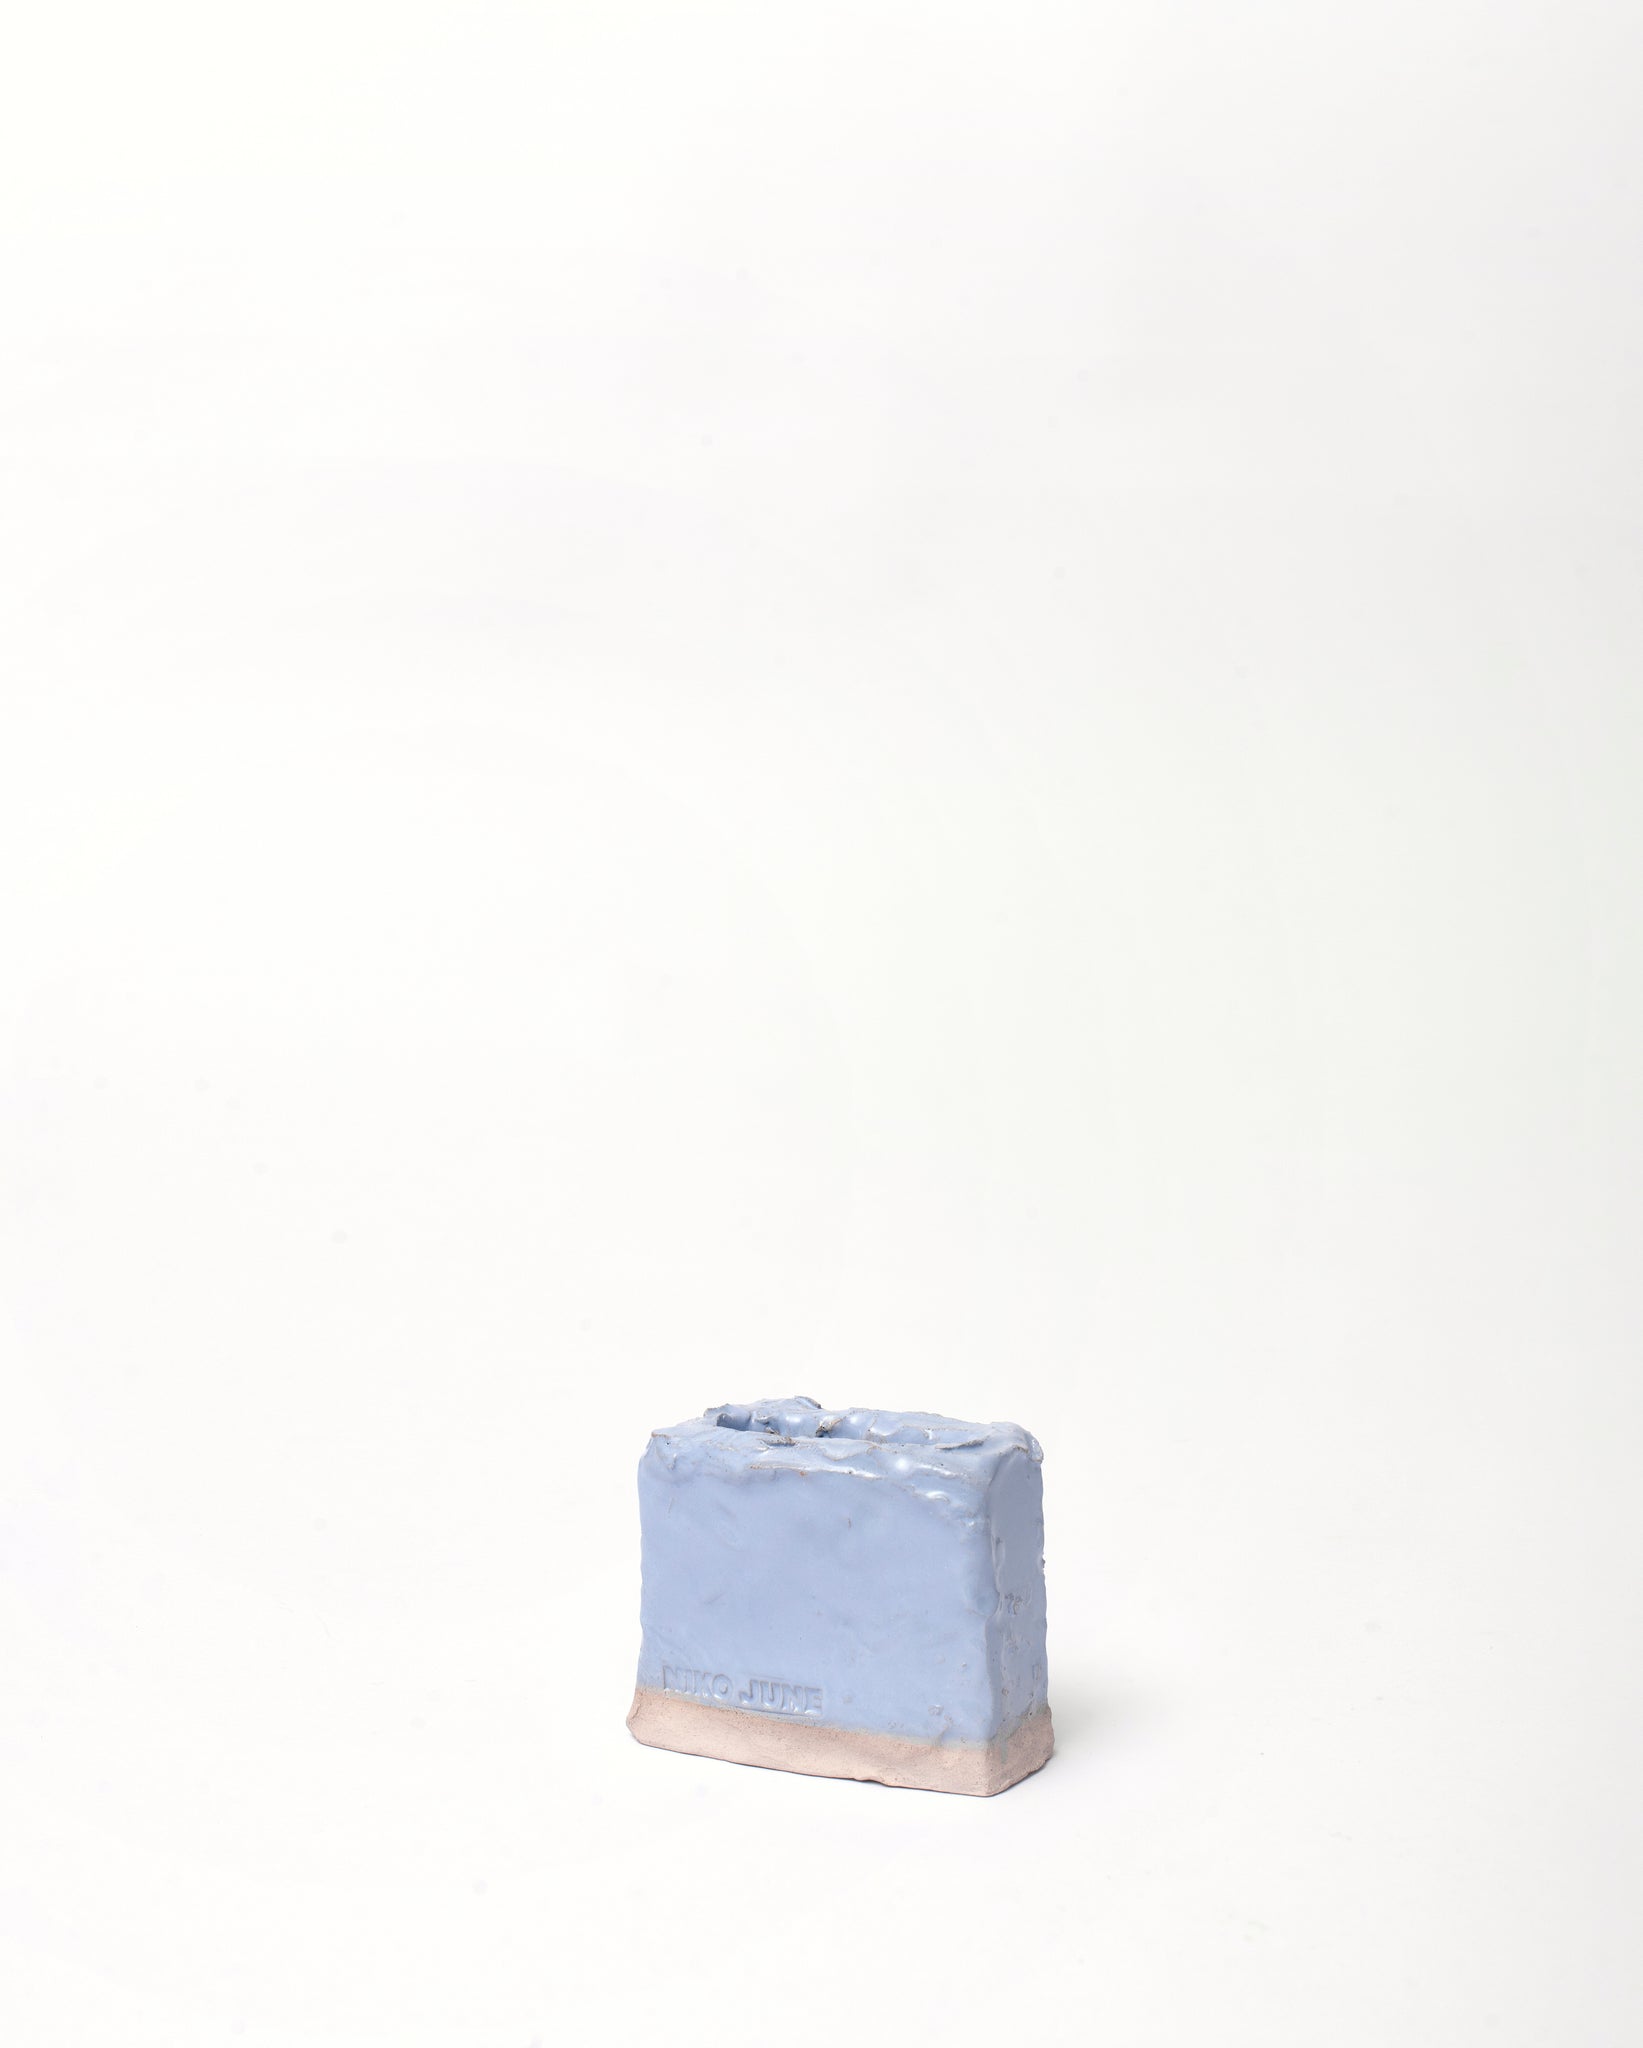 Handmade ceramic organizer object in light blue glaze inclination vertical in white background 